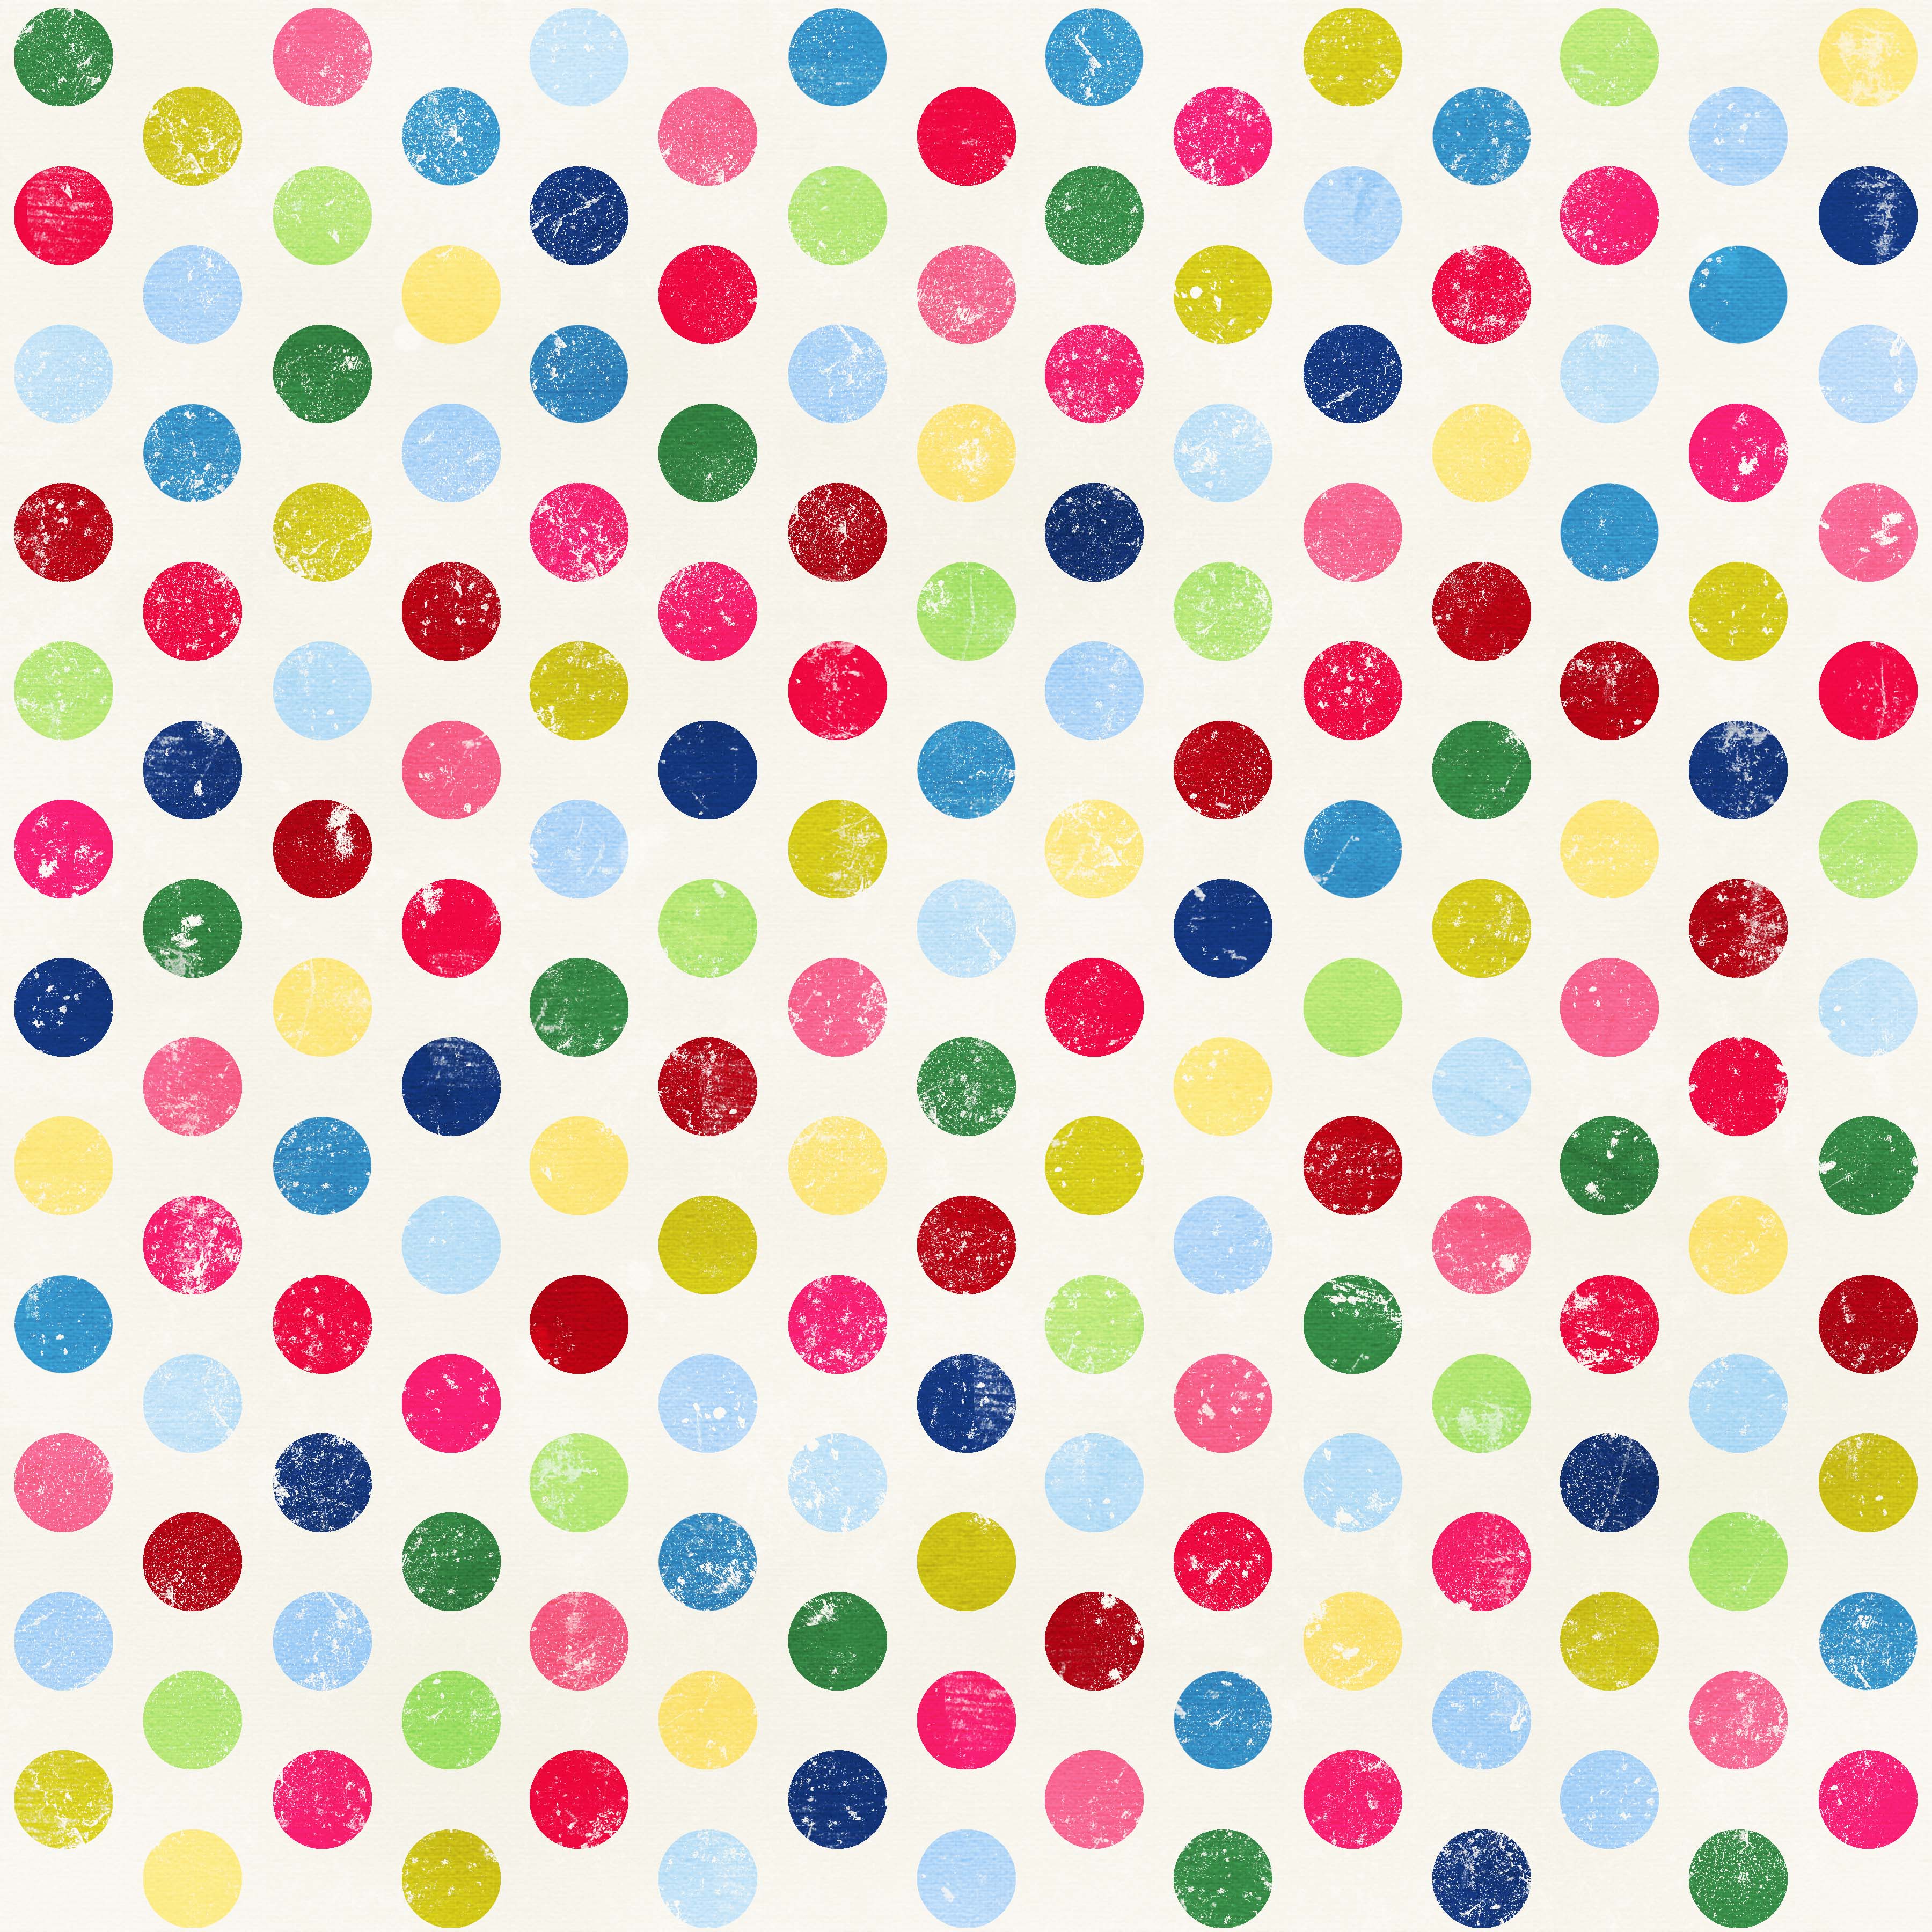 Polka Dot Wallpaper Image Crazy Gallery